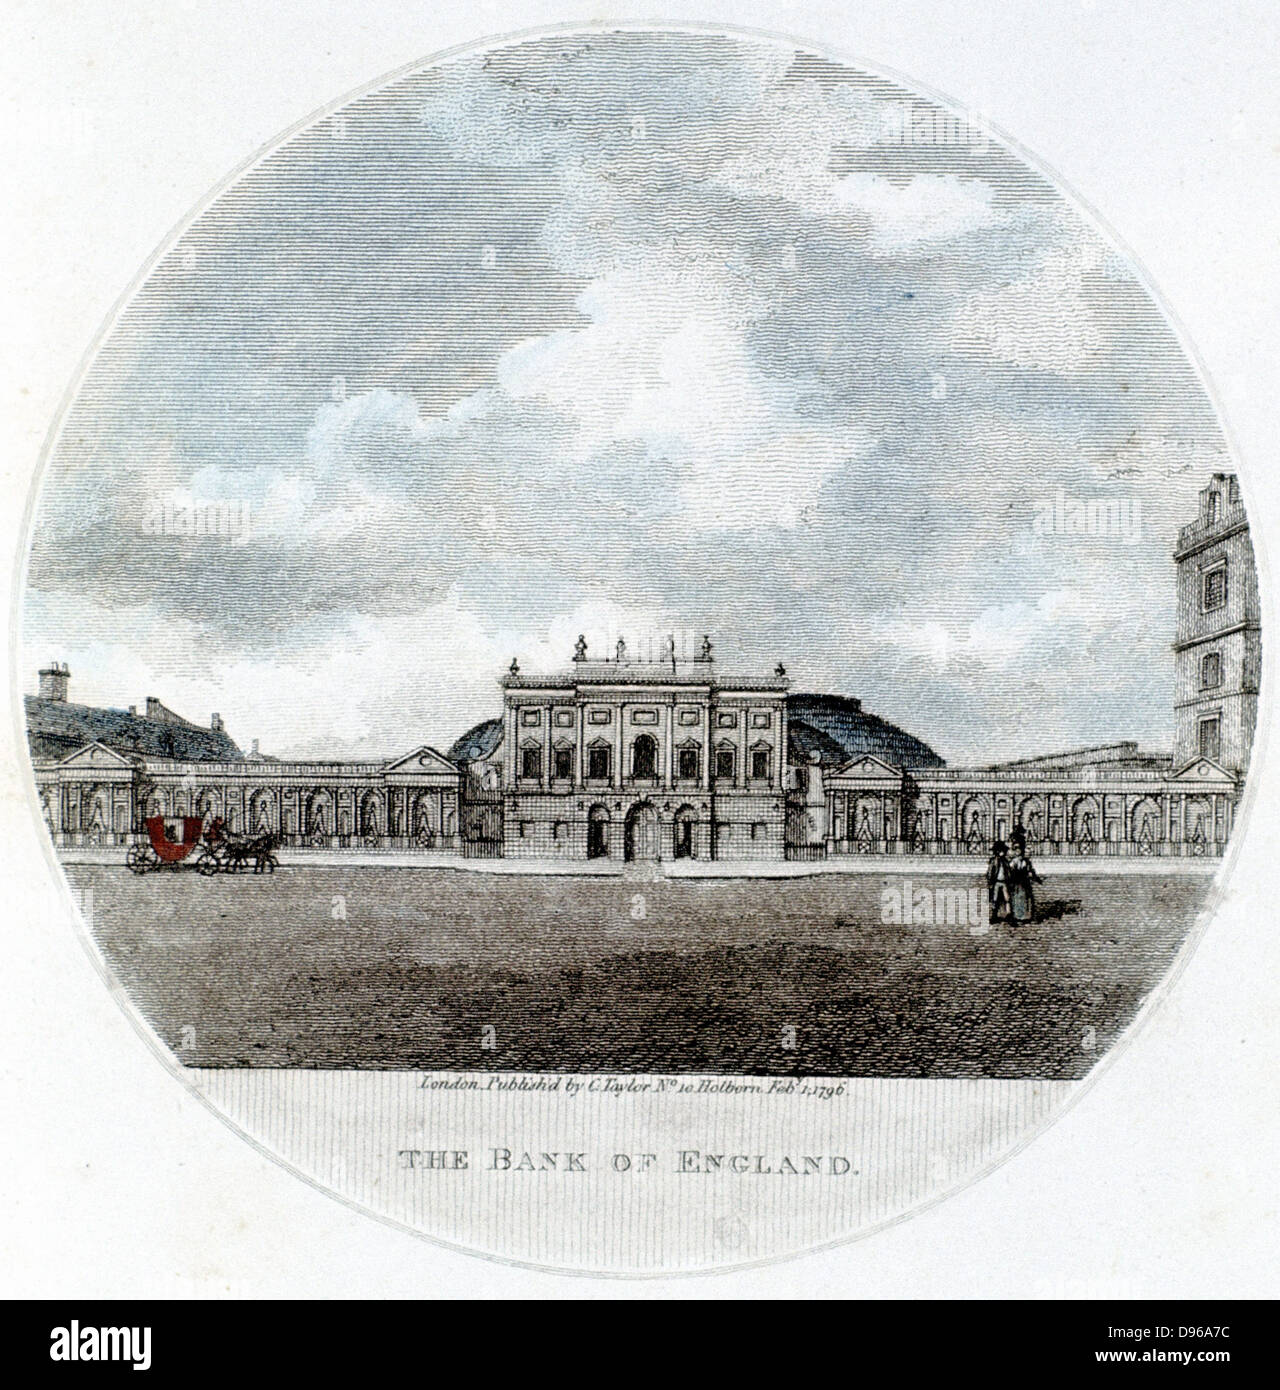 Façade of The Bank of England, London. Hand-coloured engraving 1796 Stock Photo